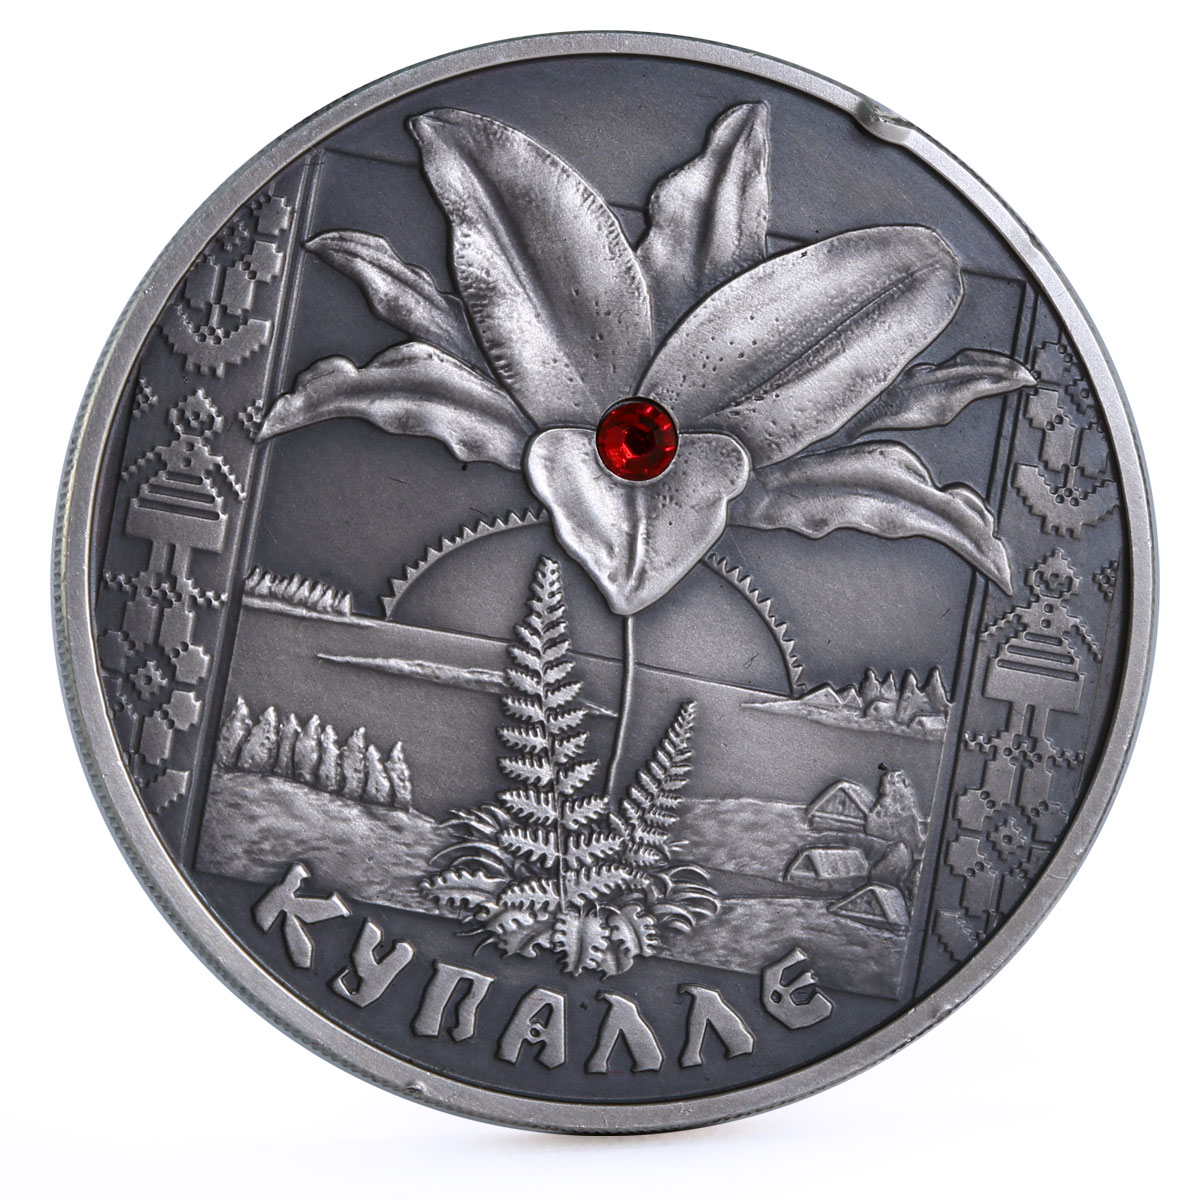 Belarus 20 rubles Belarusian Holiday Kupalle Flower silver coin 2004